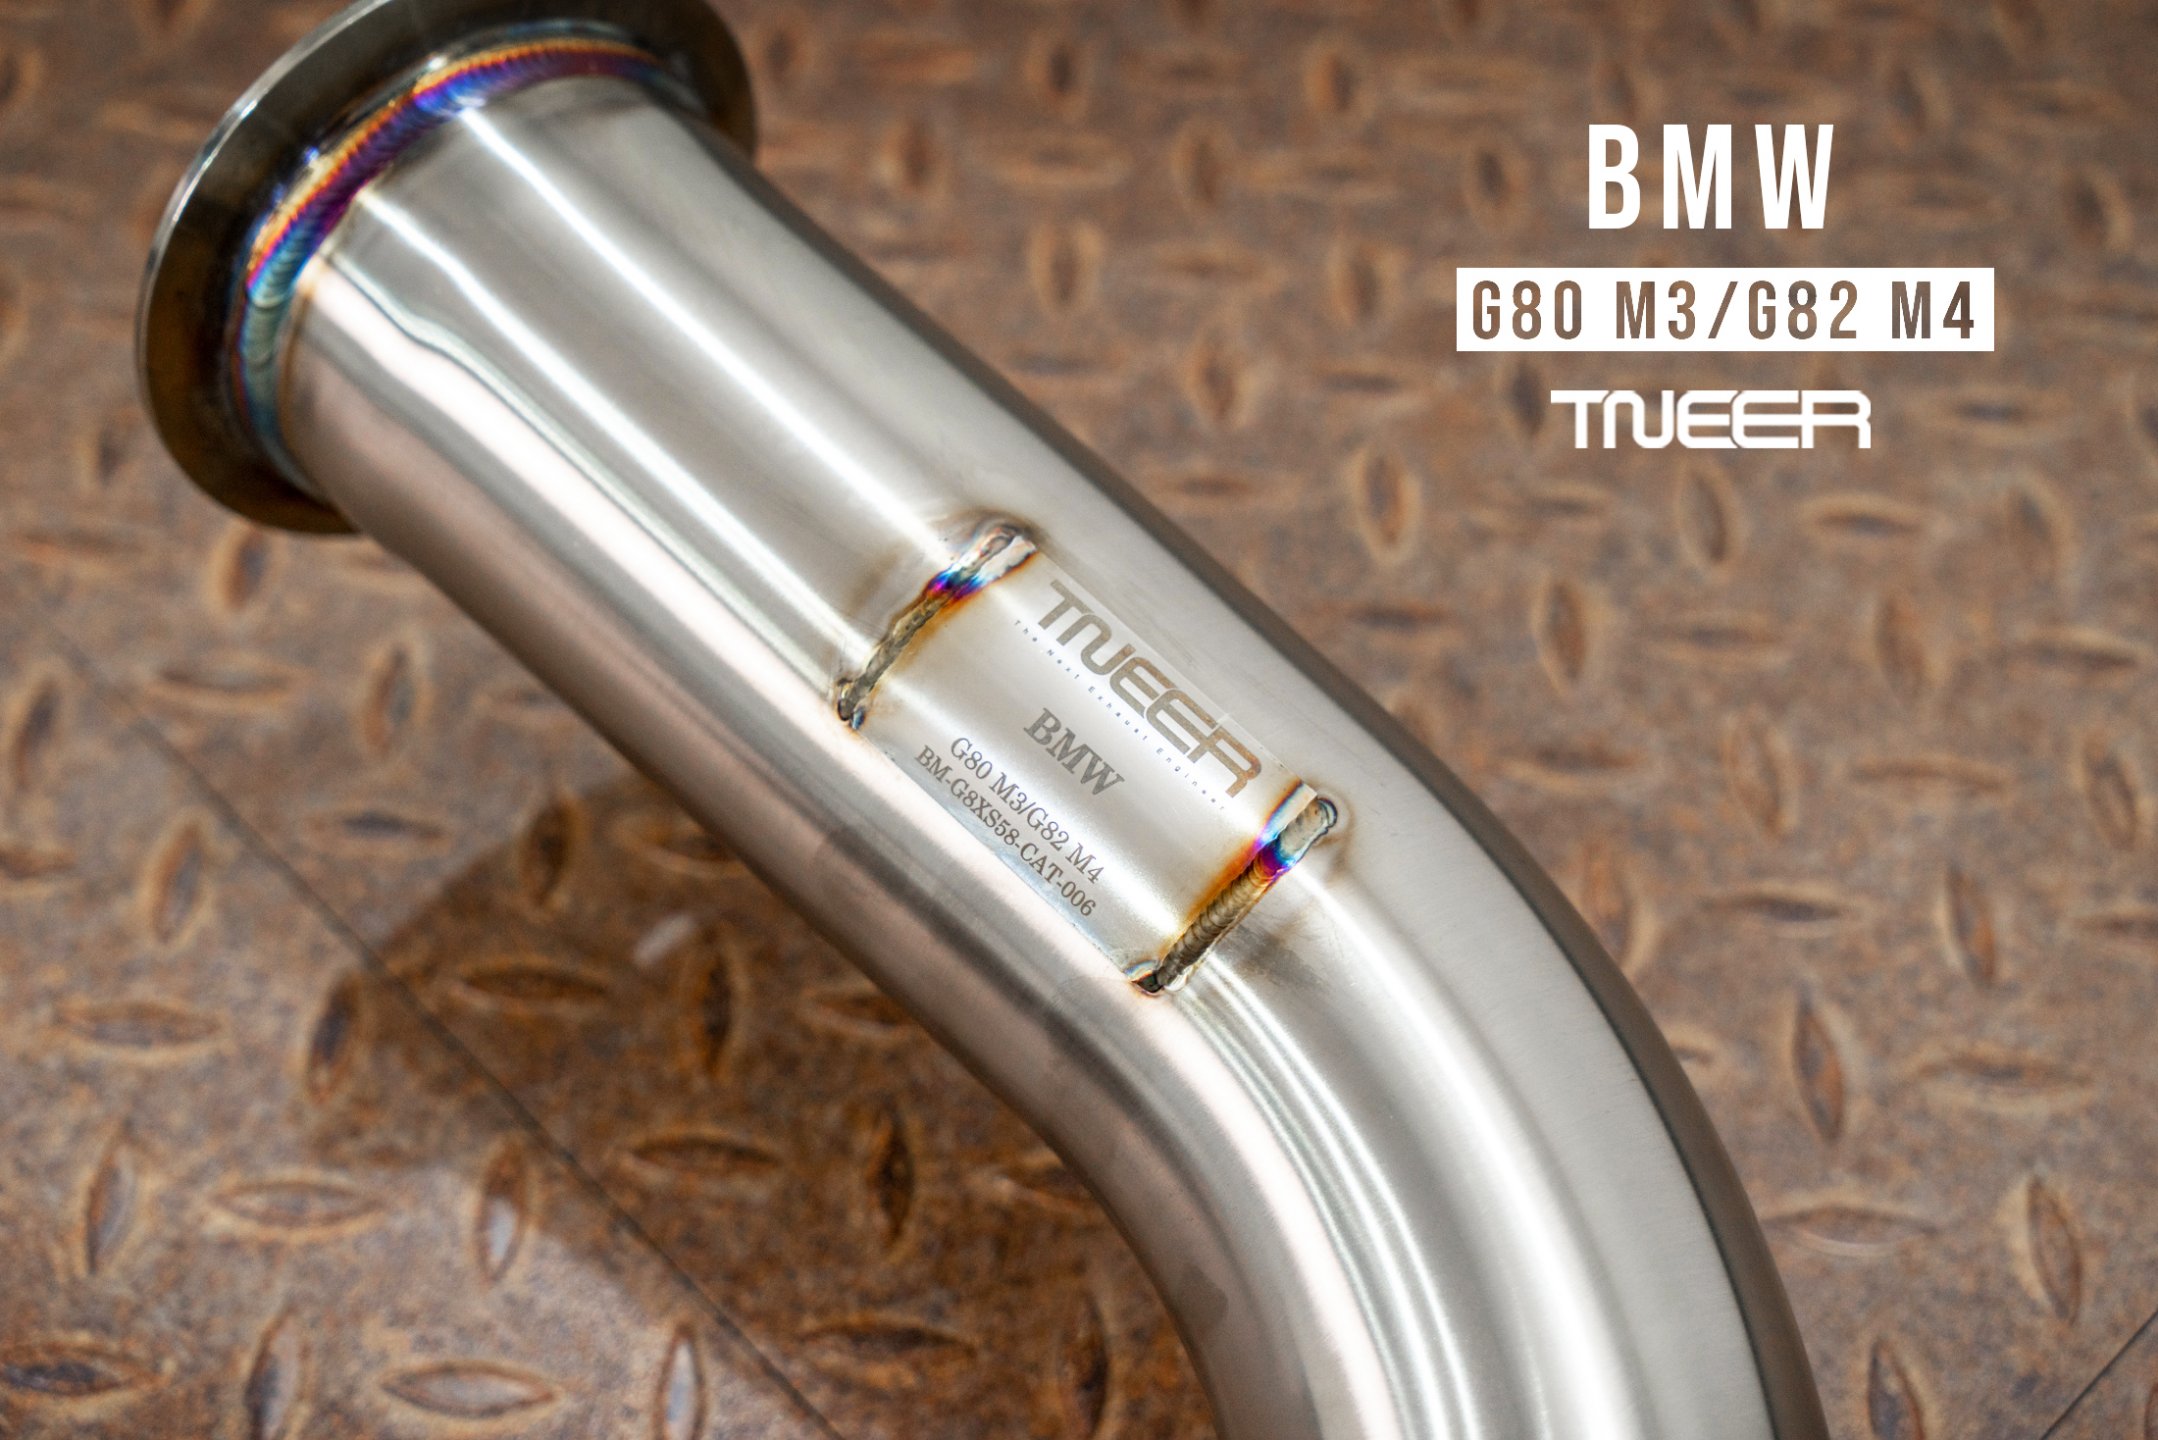 BMW M3 G80 & M4 G82 – TNEER M Performance Downpipes